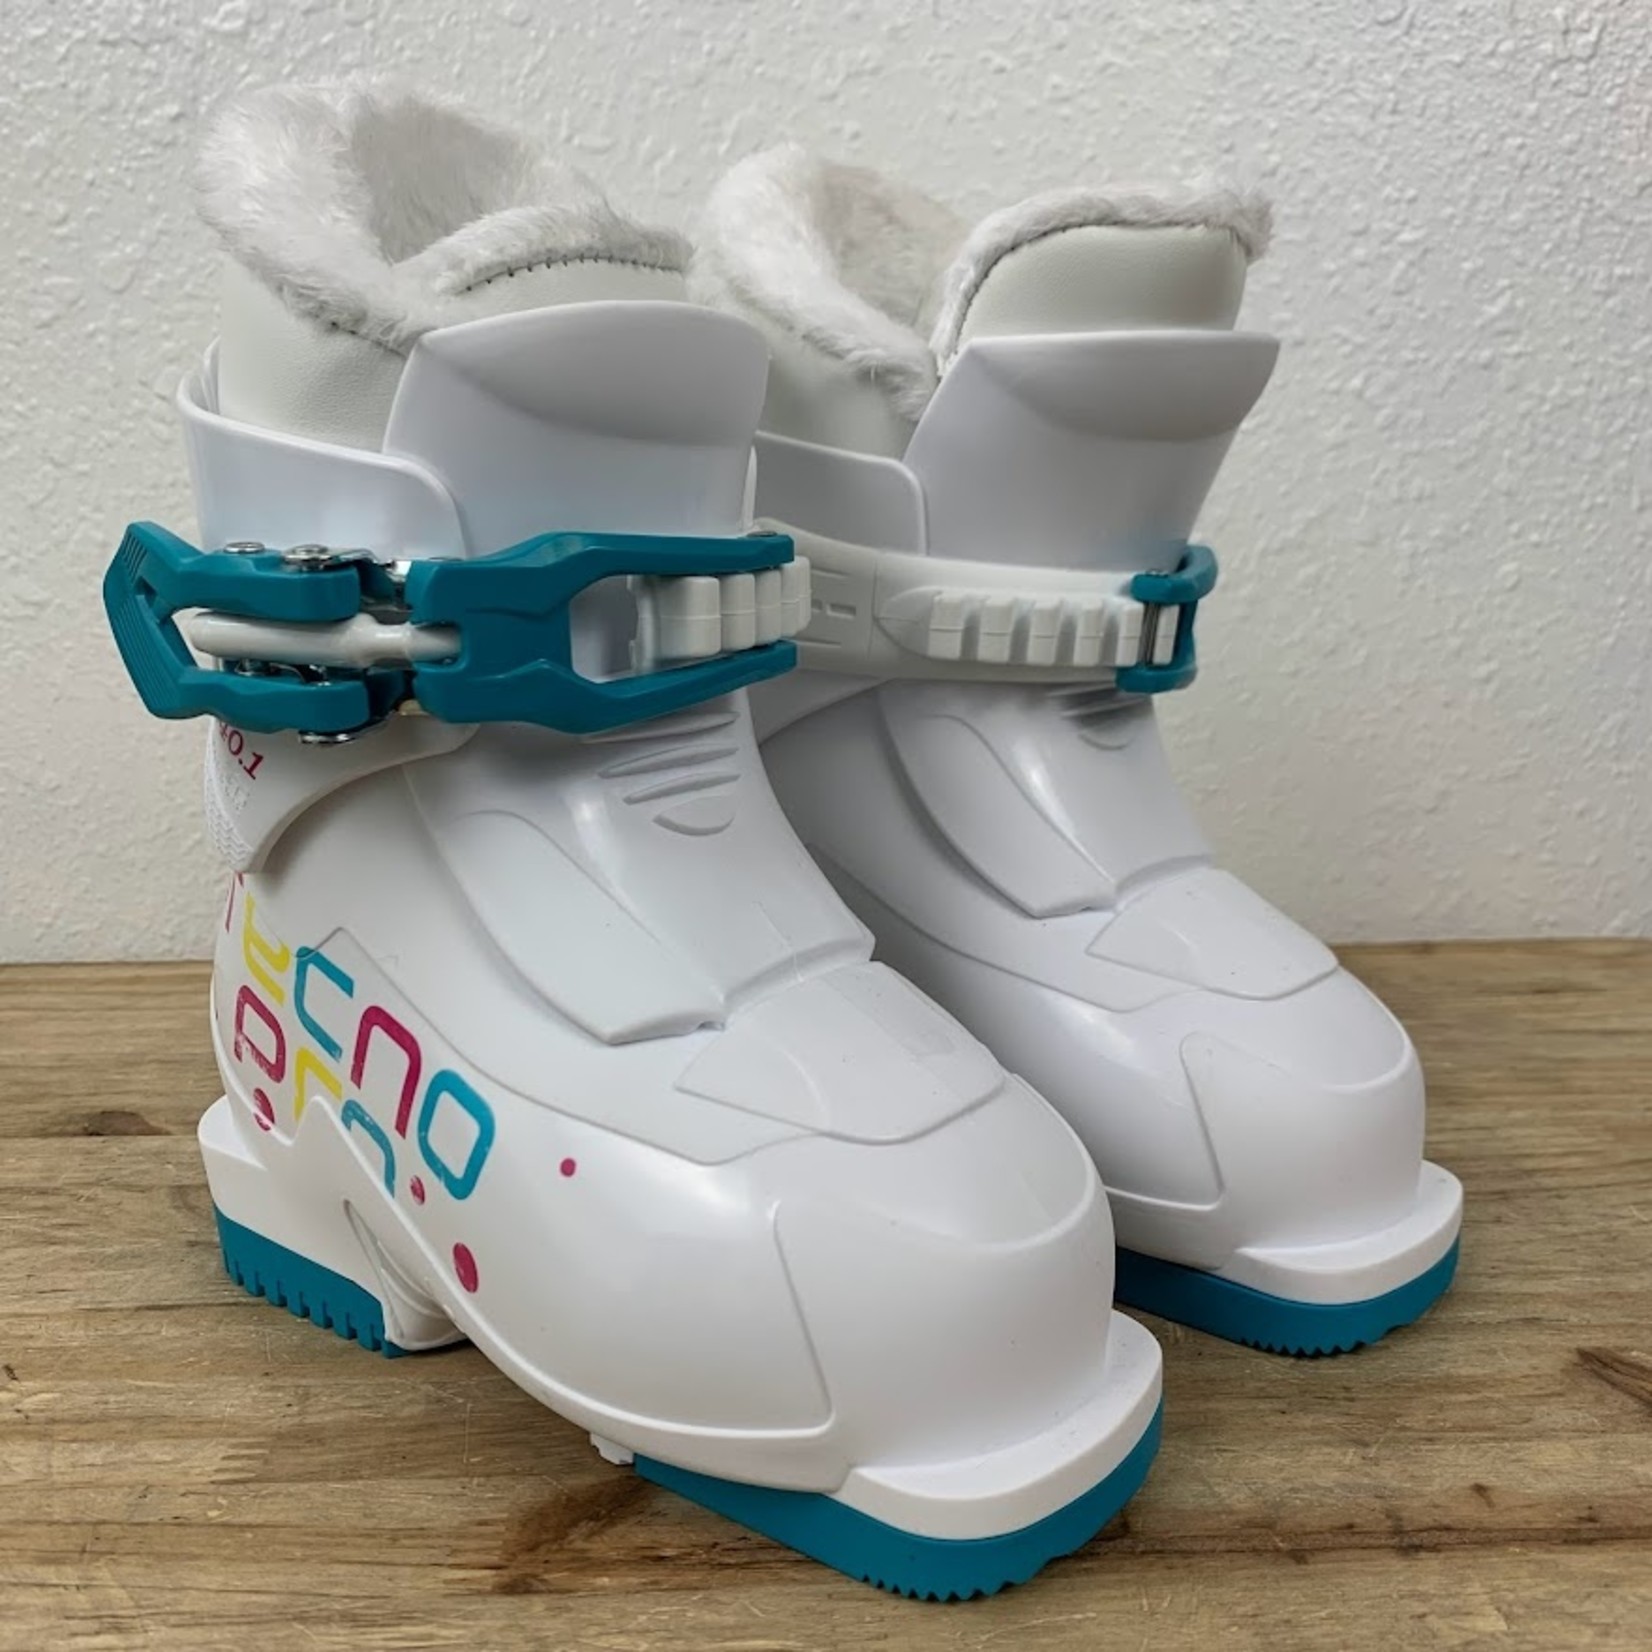 Tecnopro NEW 2021 TecnoPro Kids Ski Boots, Size 18.5